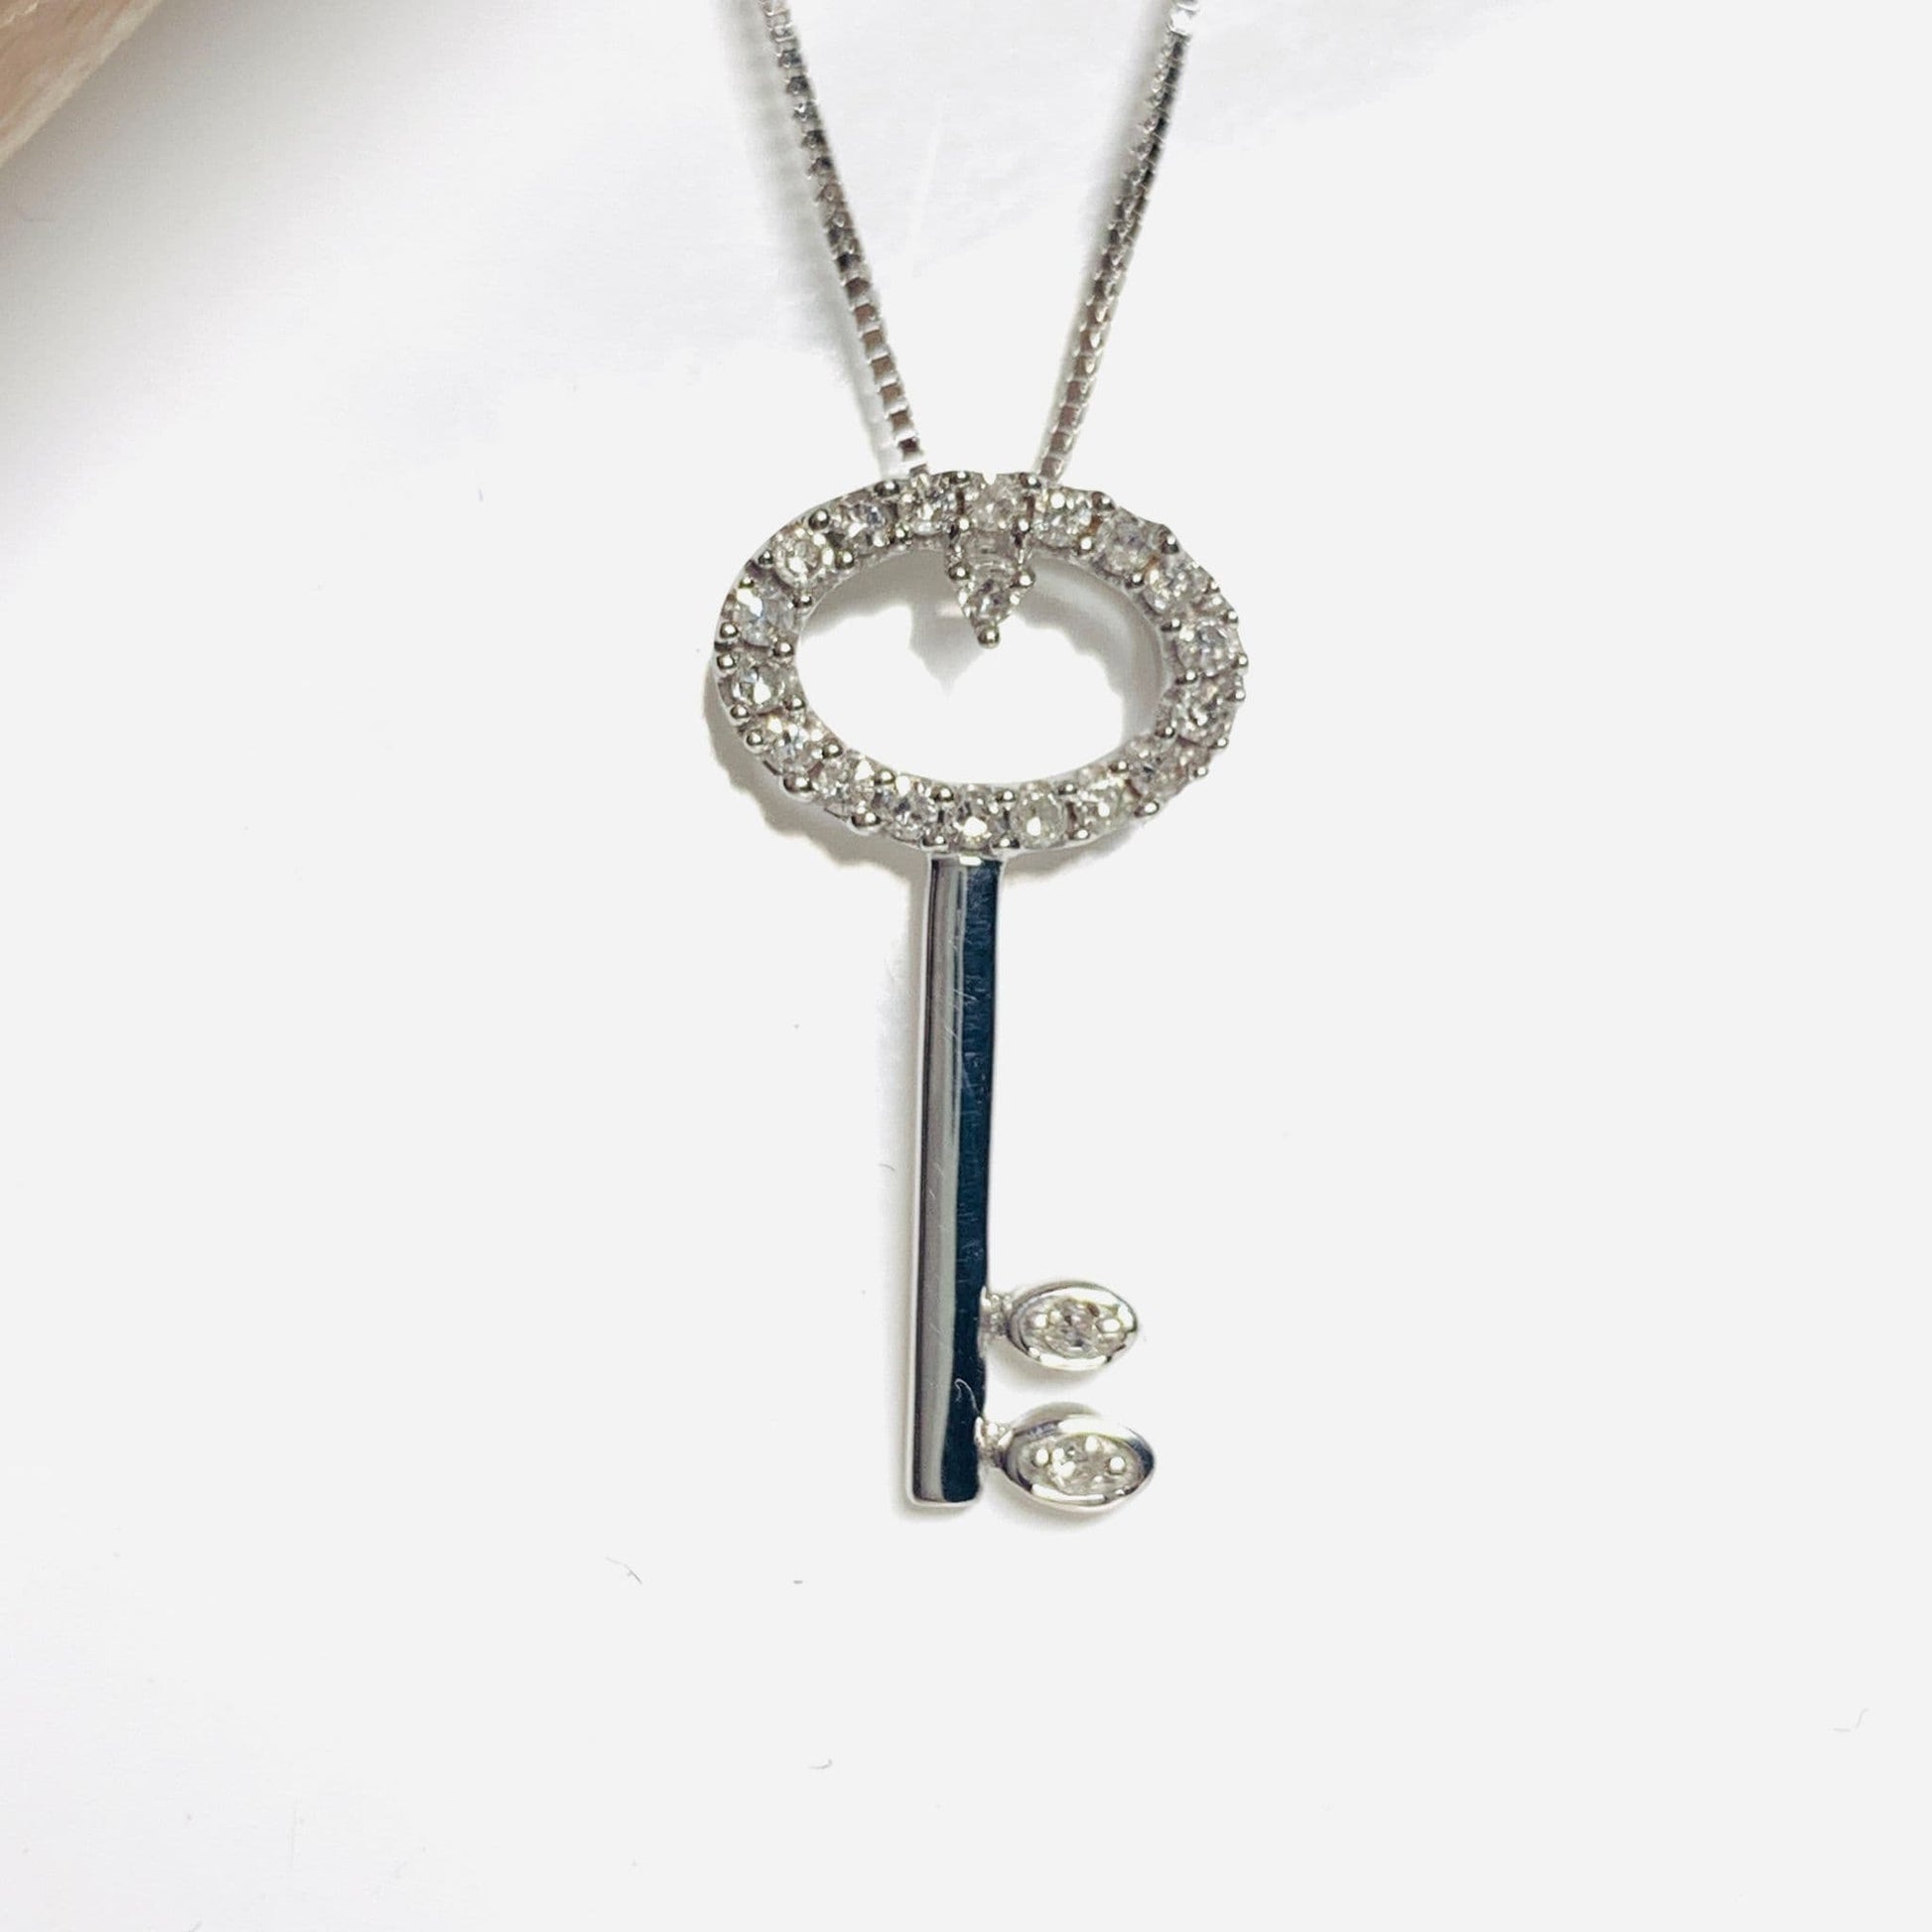 Key shaped diamond necklace pendant